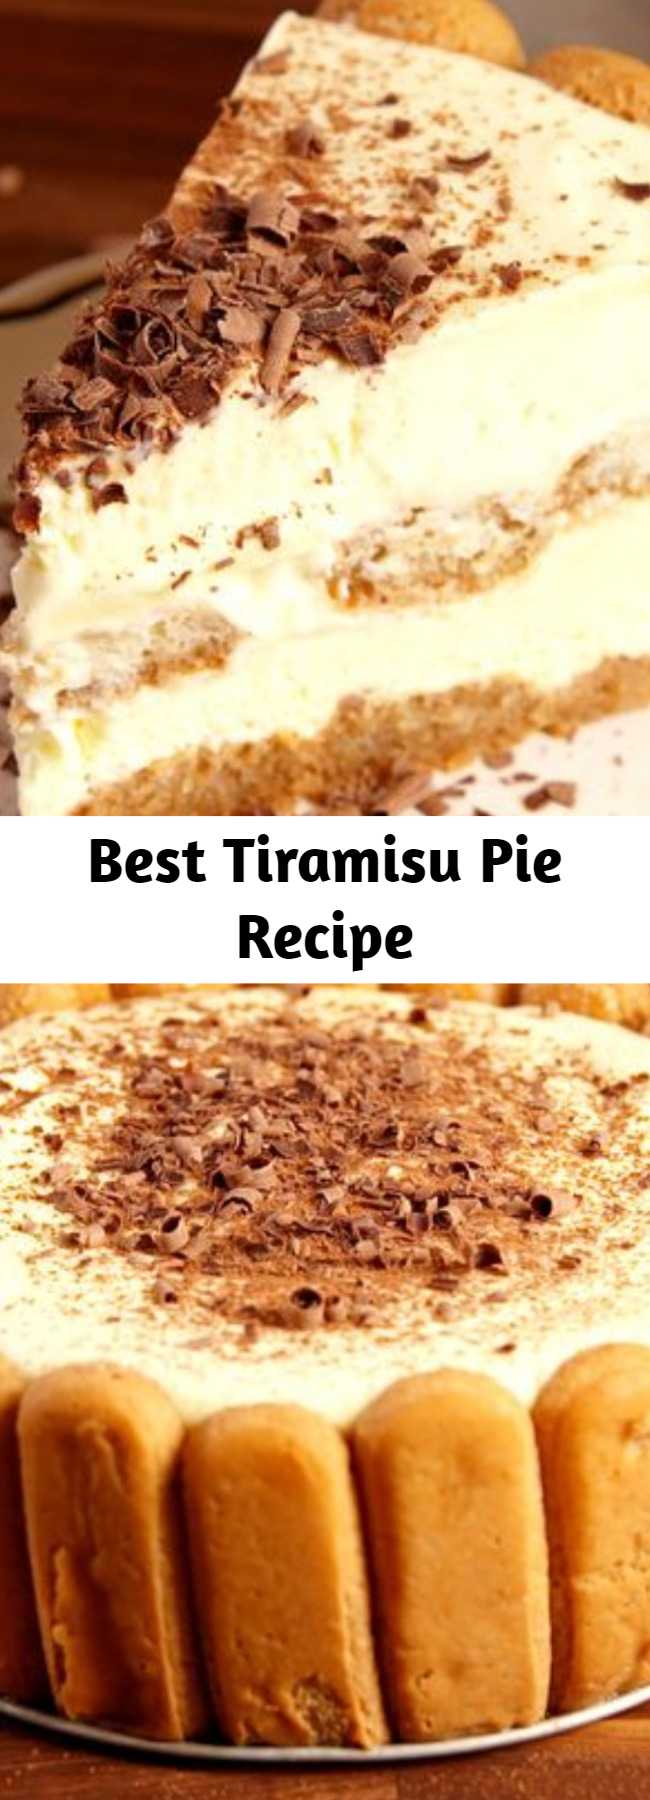 Best Tiramisu Pie Recipe - Looking for a tiramisu dessert? This Tiramisu Pie is the best. Tiramisu pie > regular tiramisu.